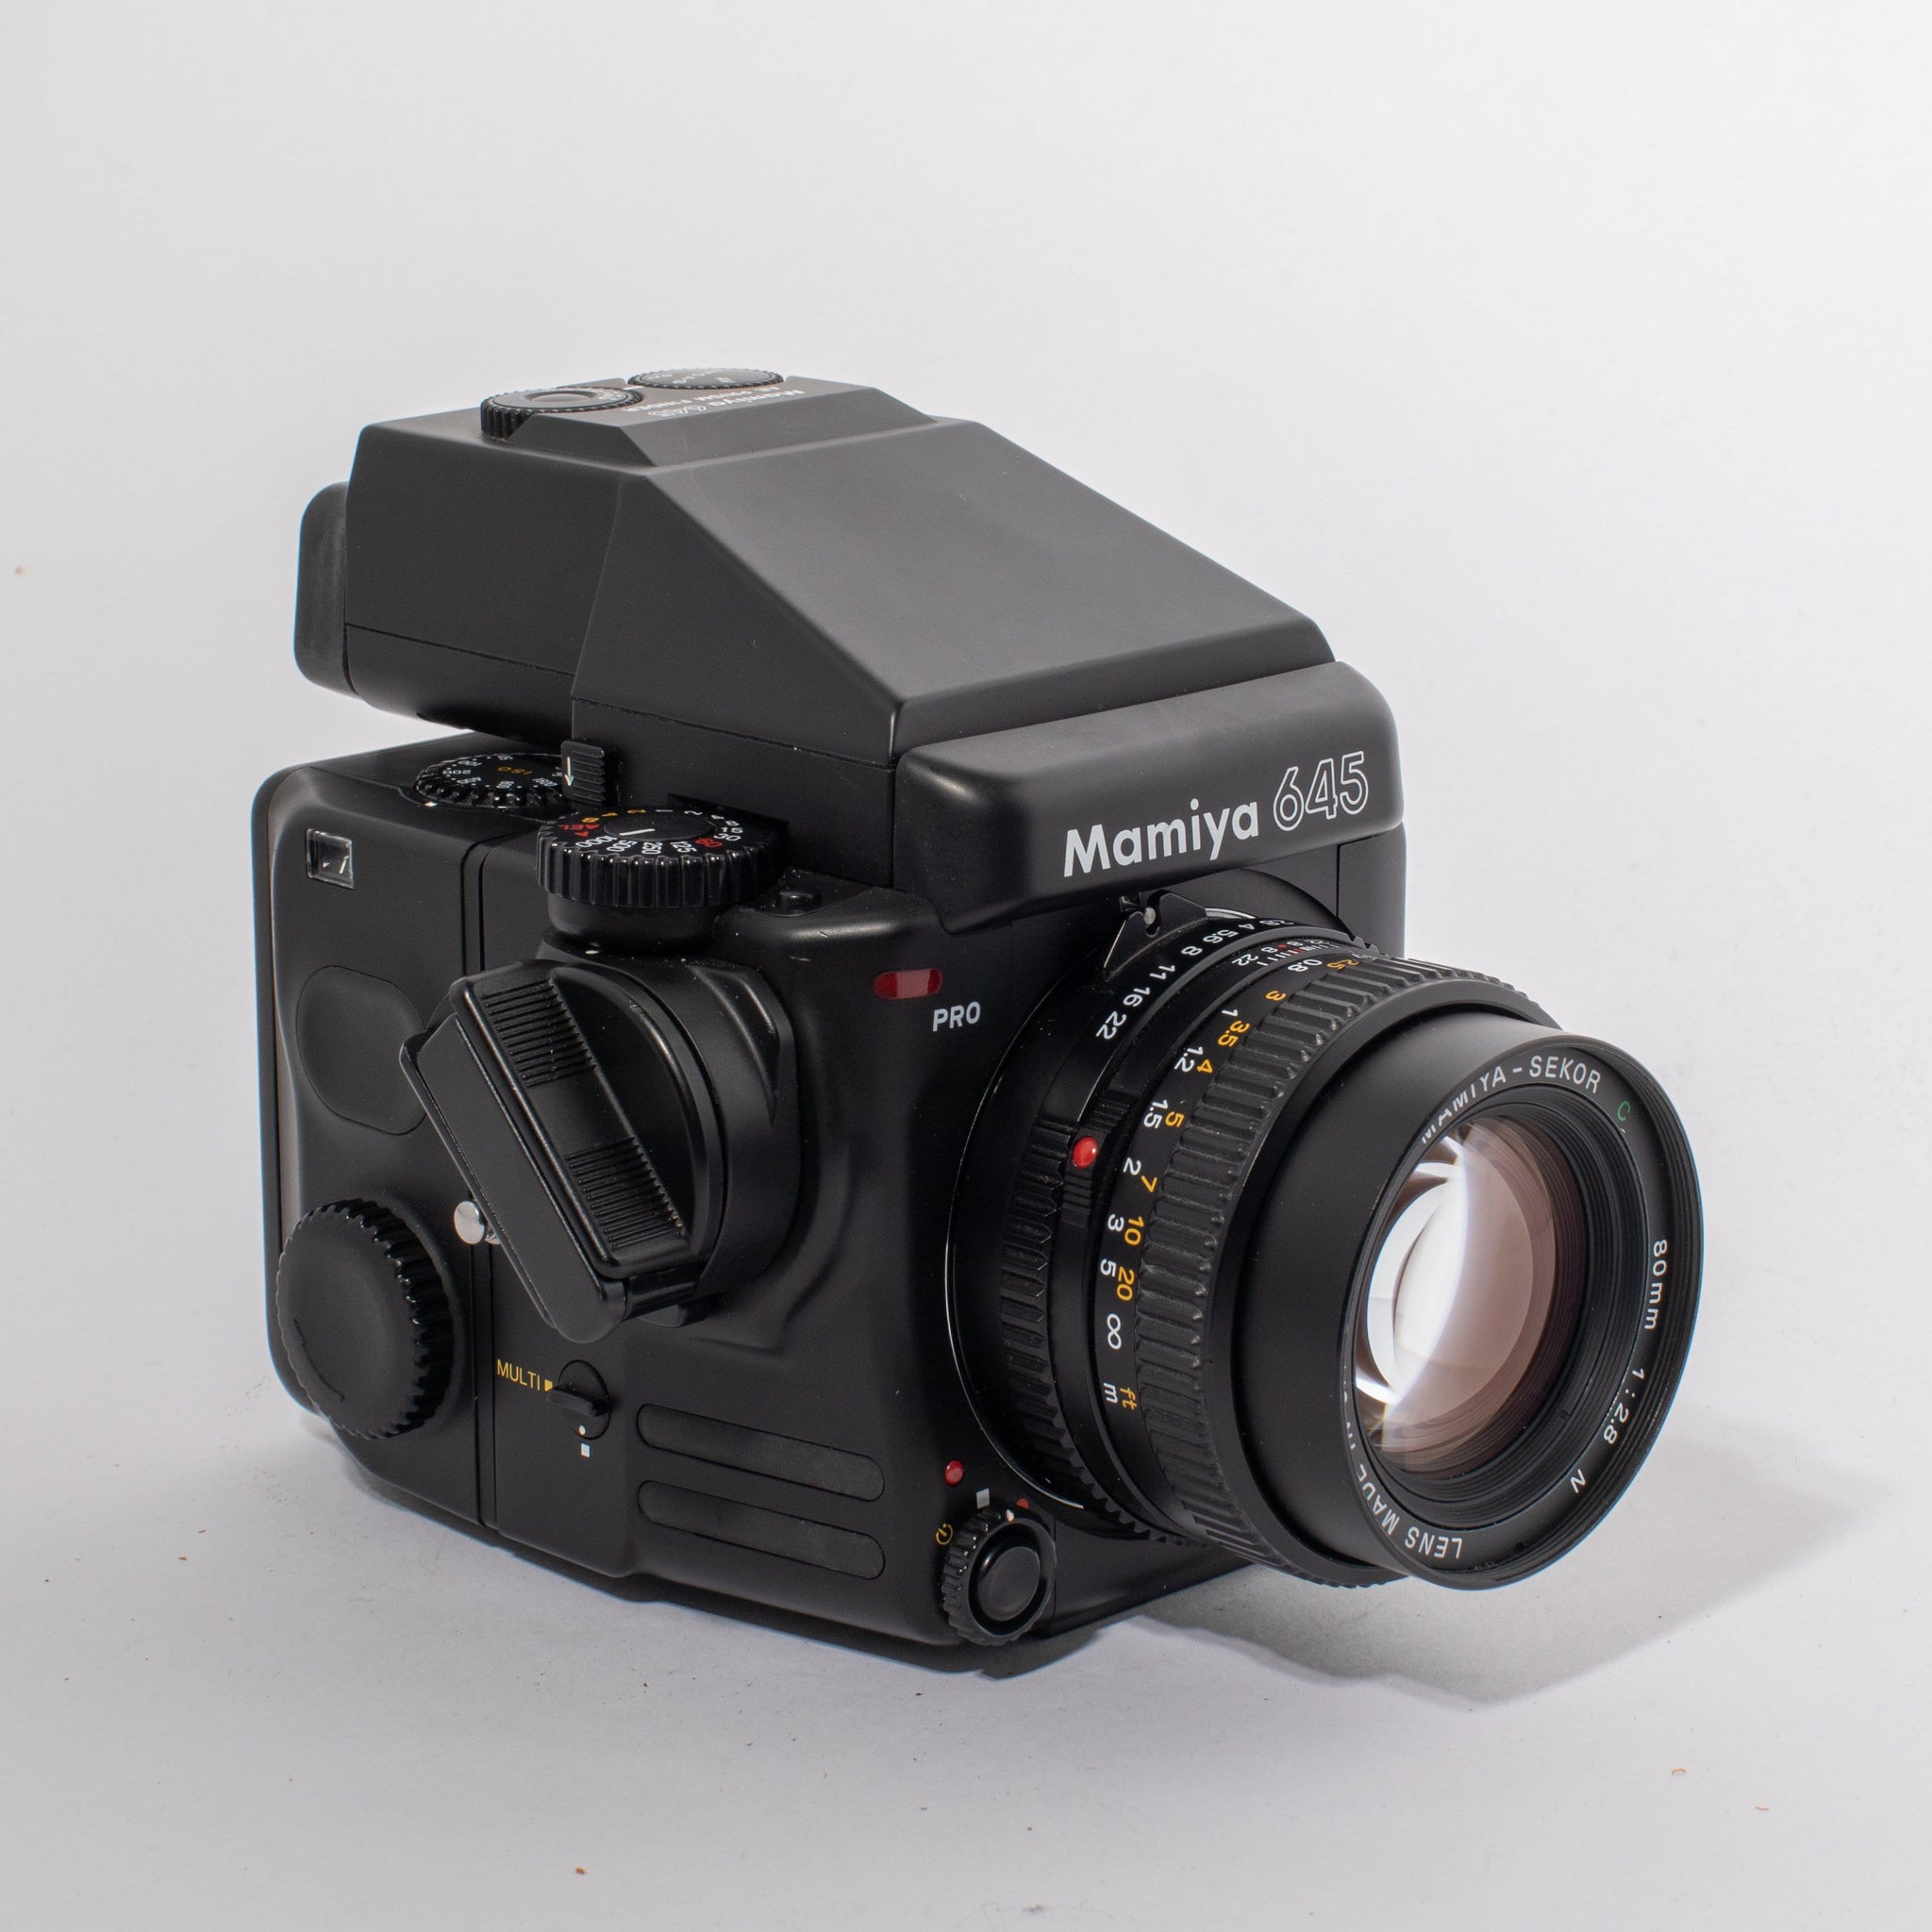 Mamiya 645 Pro with Mamiya-Sekor 80mm f/2.8 - FRESH CLA – Film